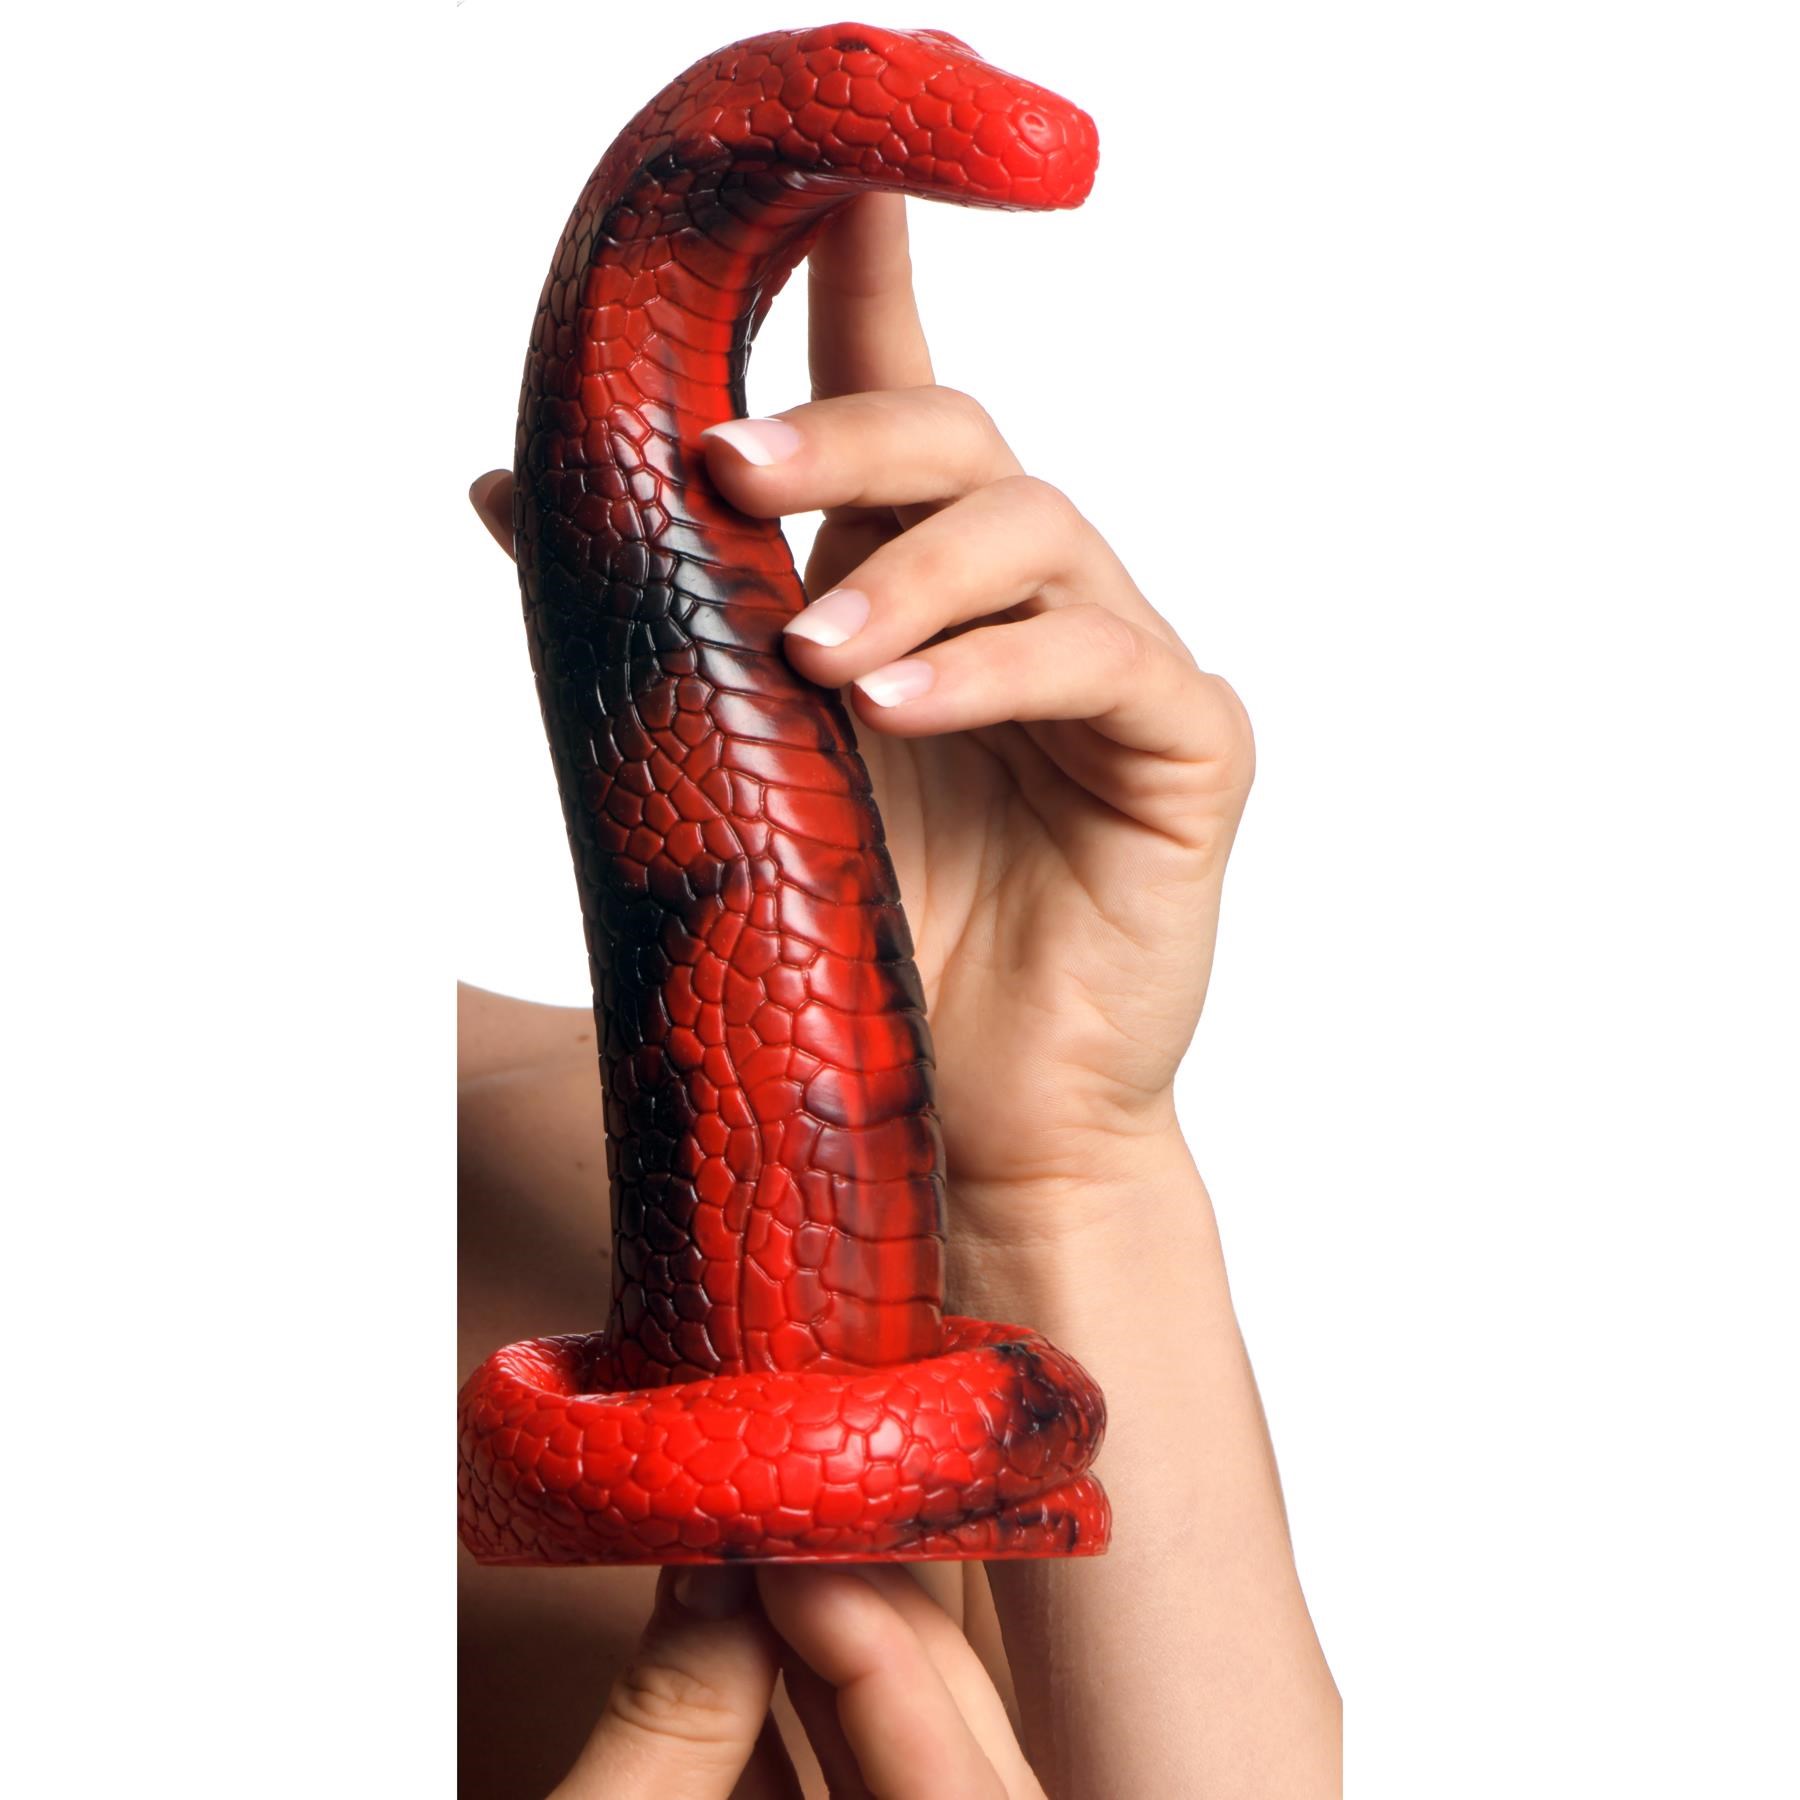 CreatureCocks King Cobra Silicone Dildo - Hand Shot to Show Size